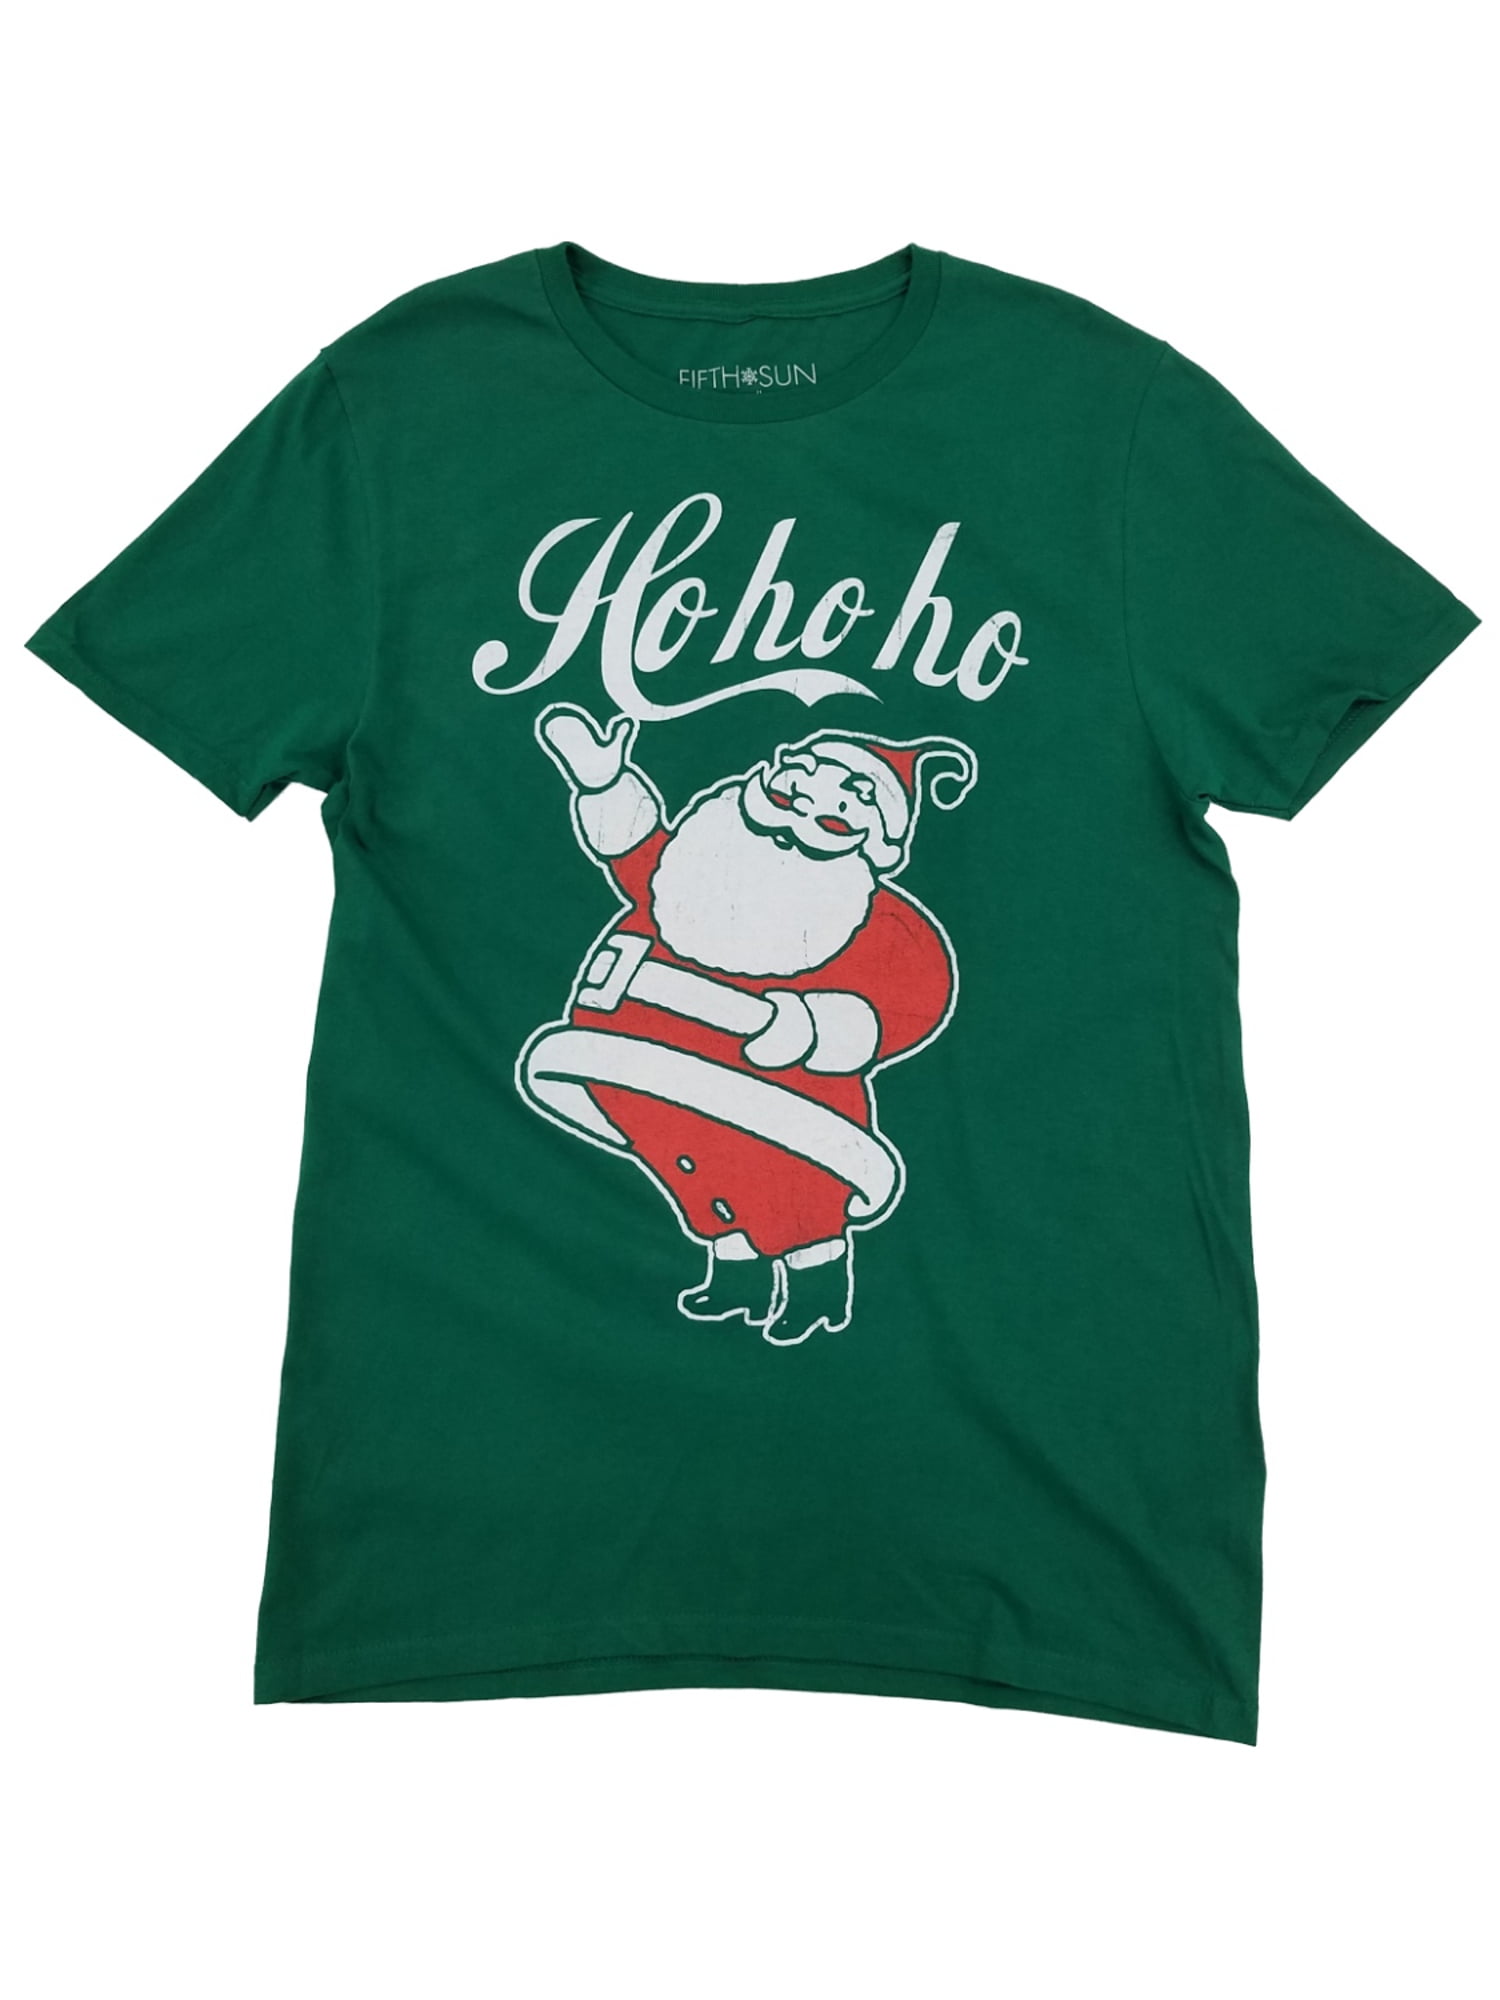 Ho Ho Ho christmas tee shirts